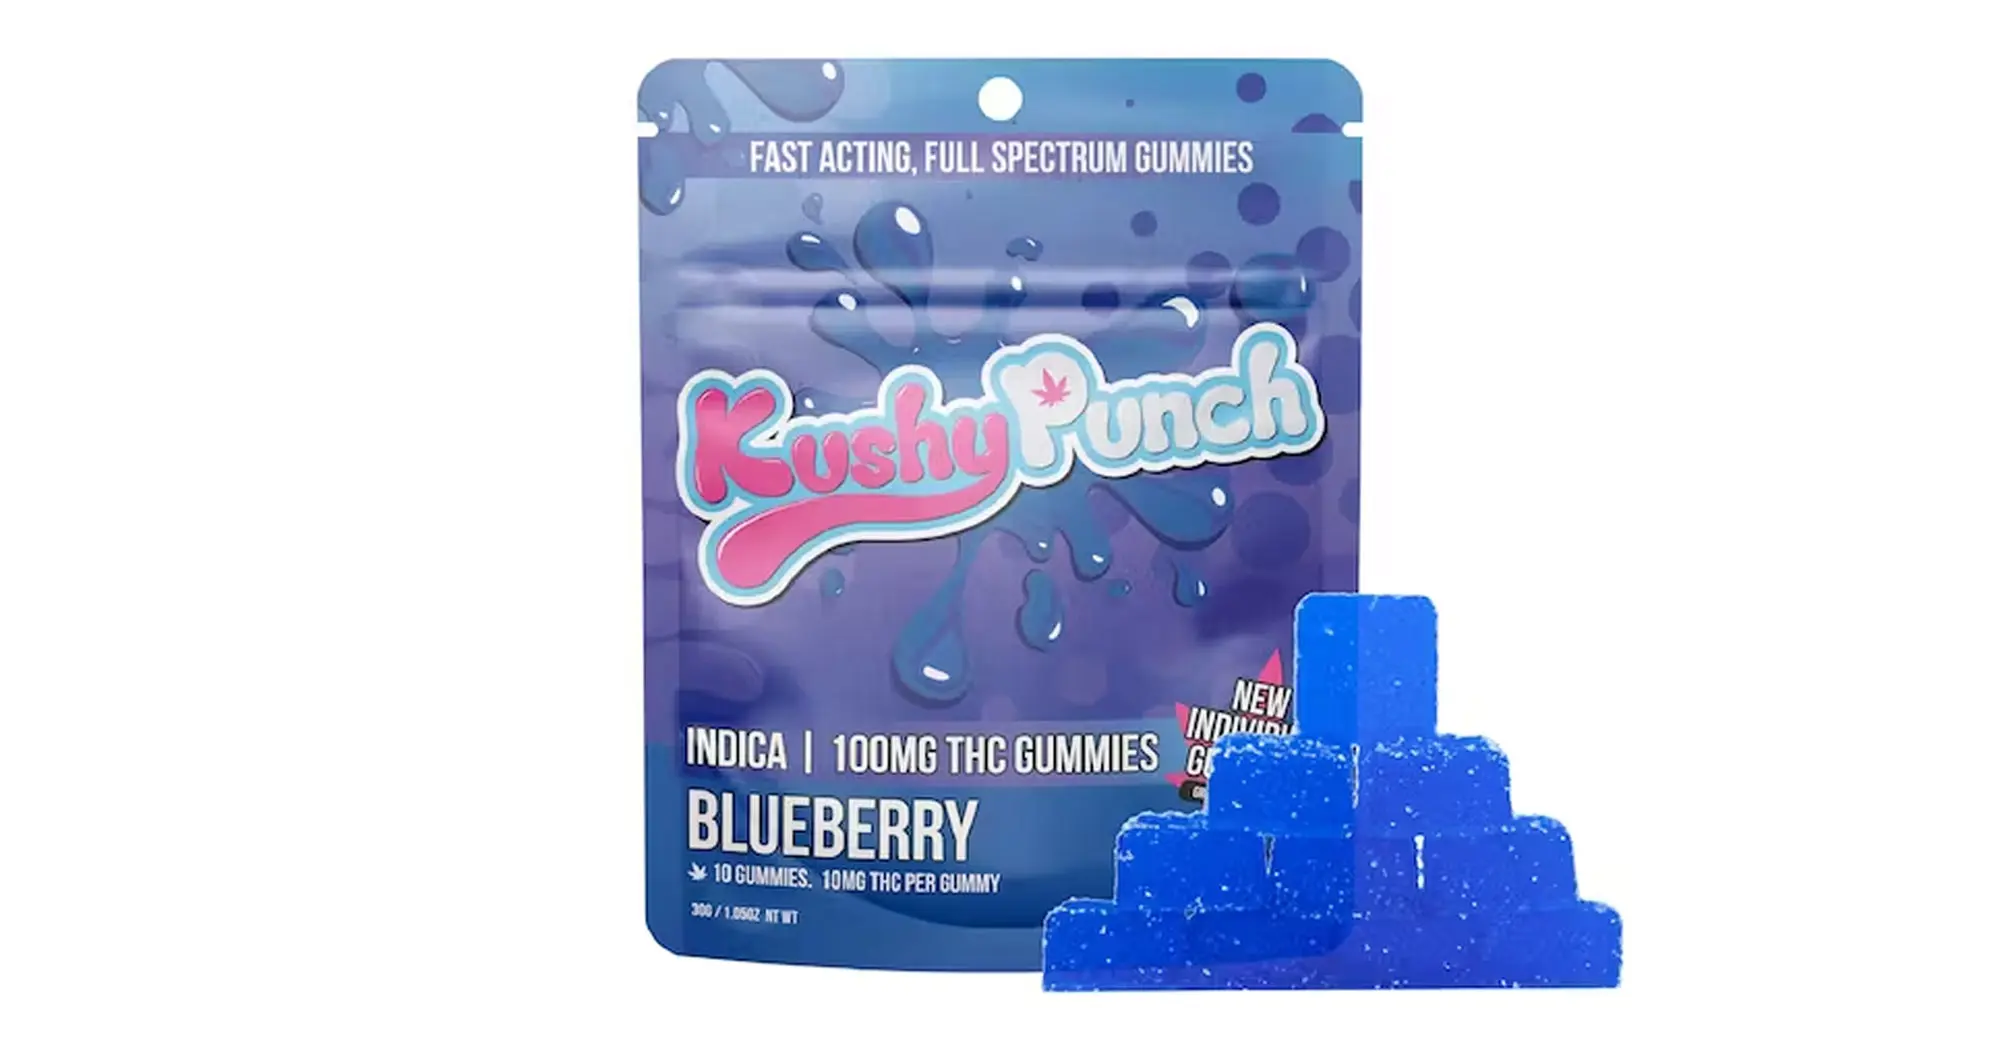 Blueberry Gummies